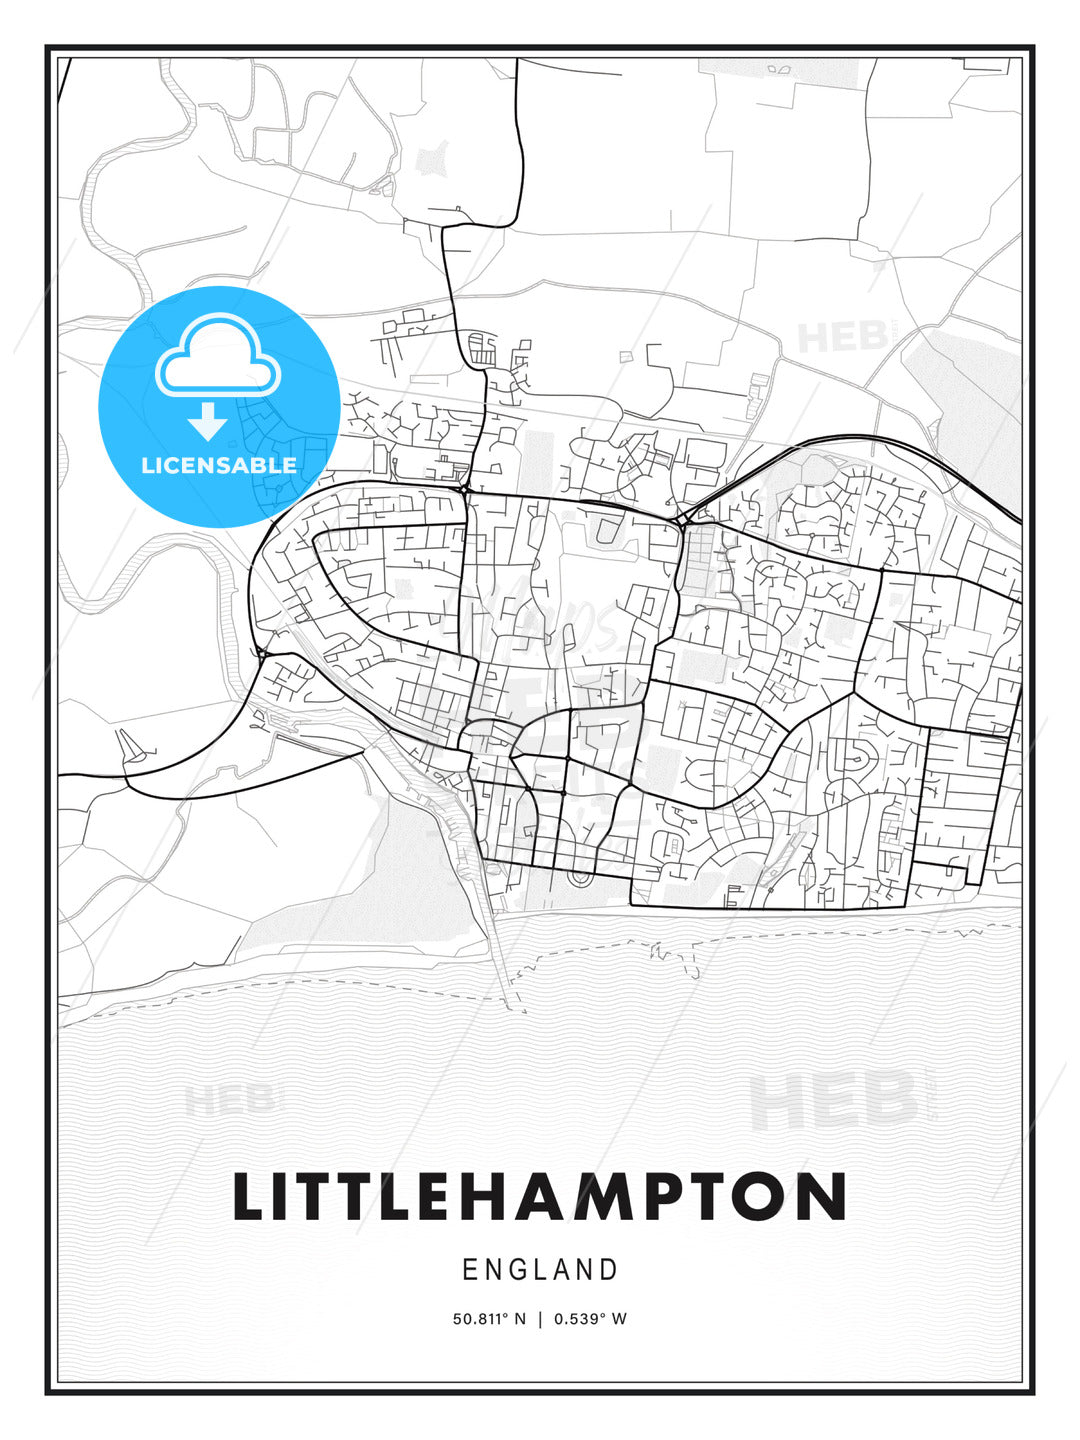 Littlehampton, England, Modern Print Template in Various Formats - HEBSTREITS Sketches